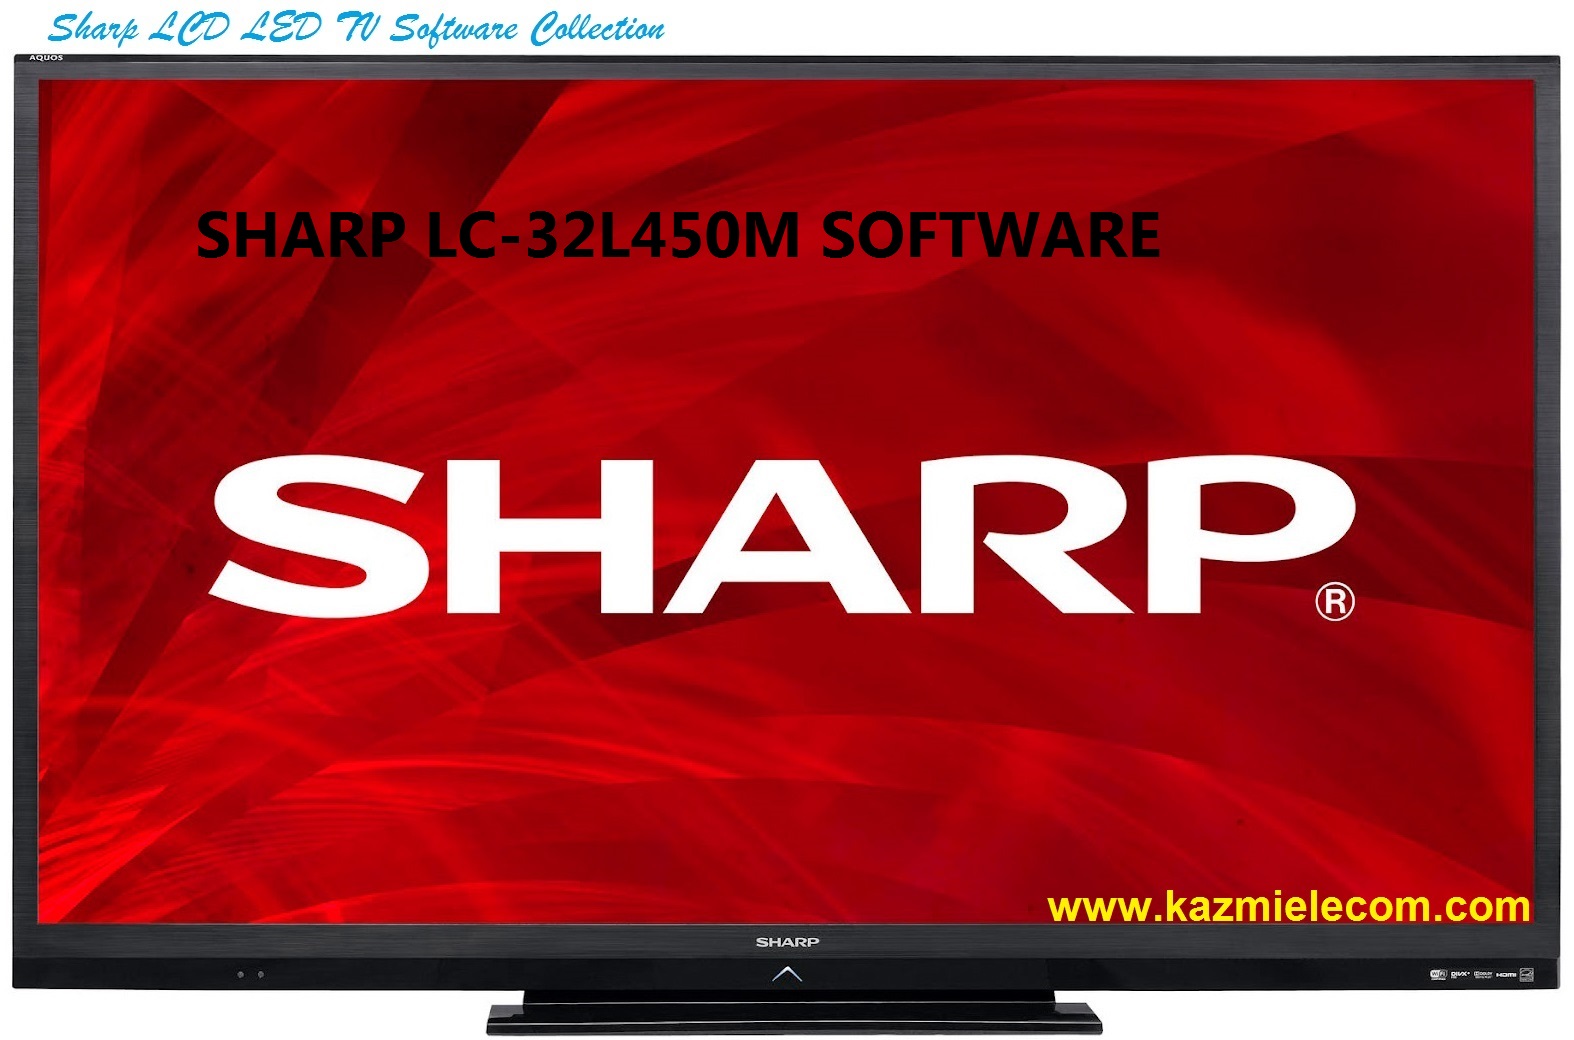 Sharp Lc-32L450M